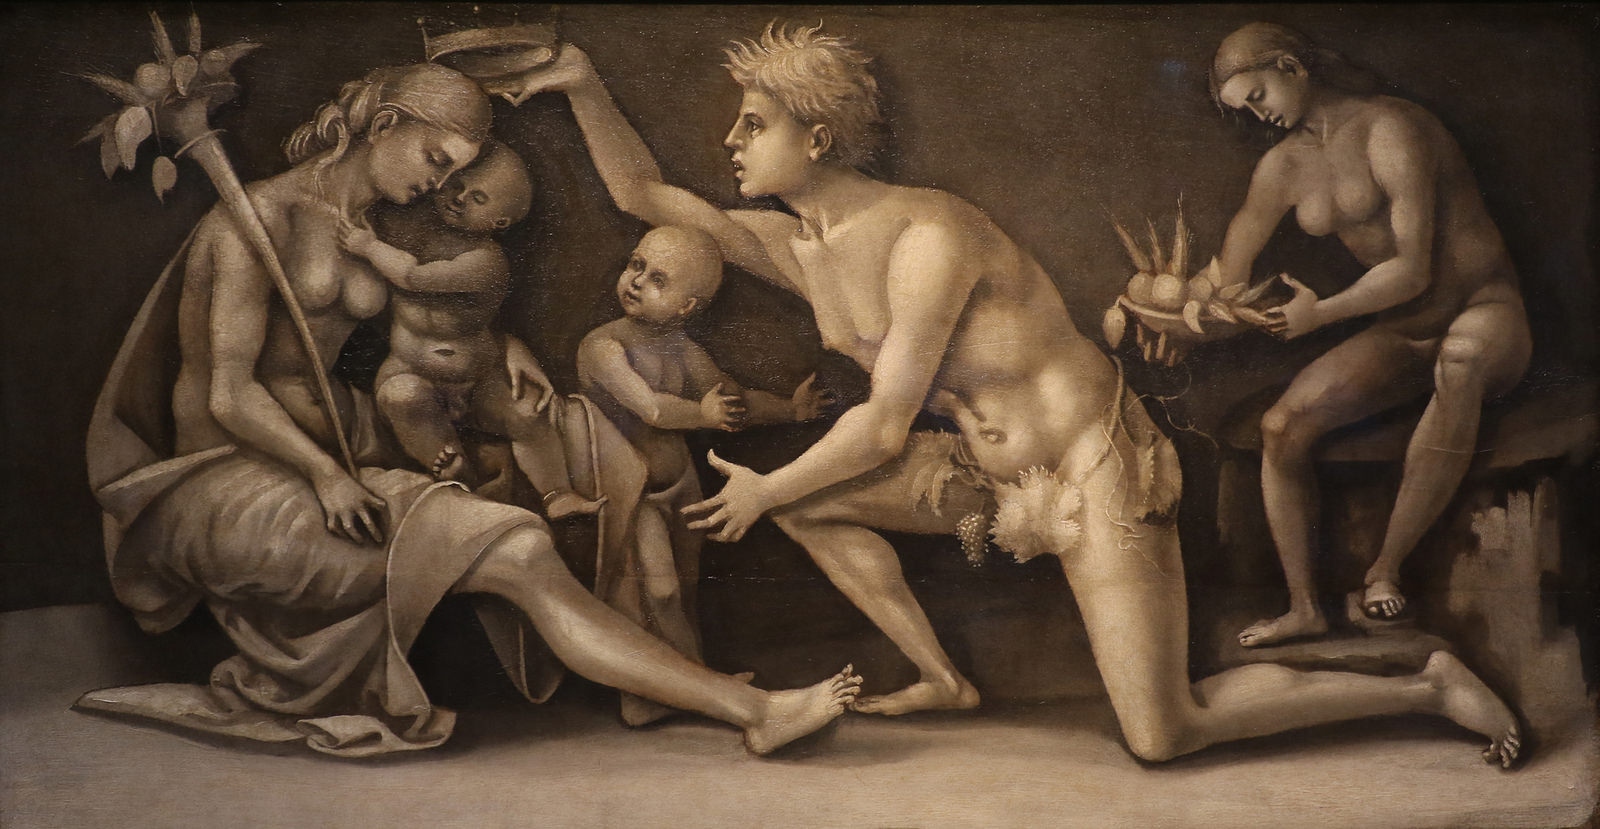 Luca+Signorelli-1445-1523 (47).jpg